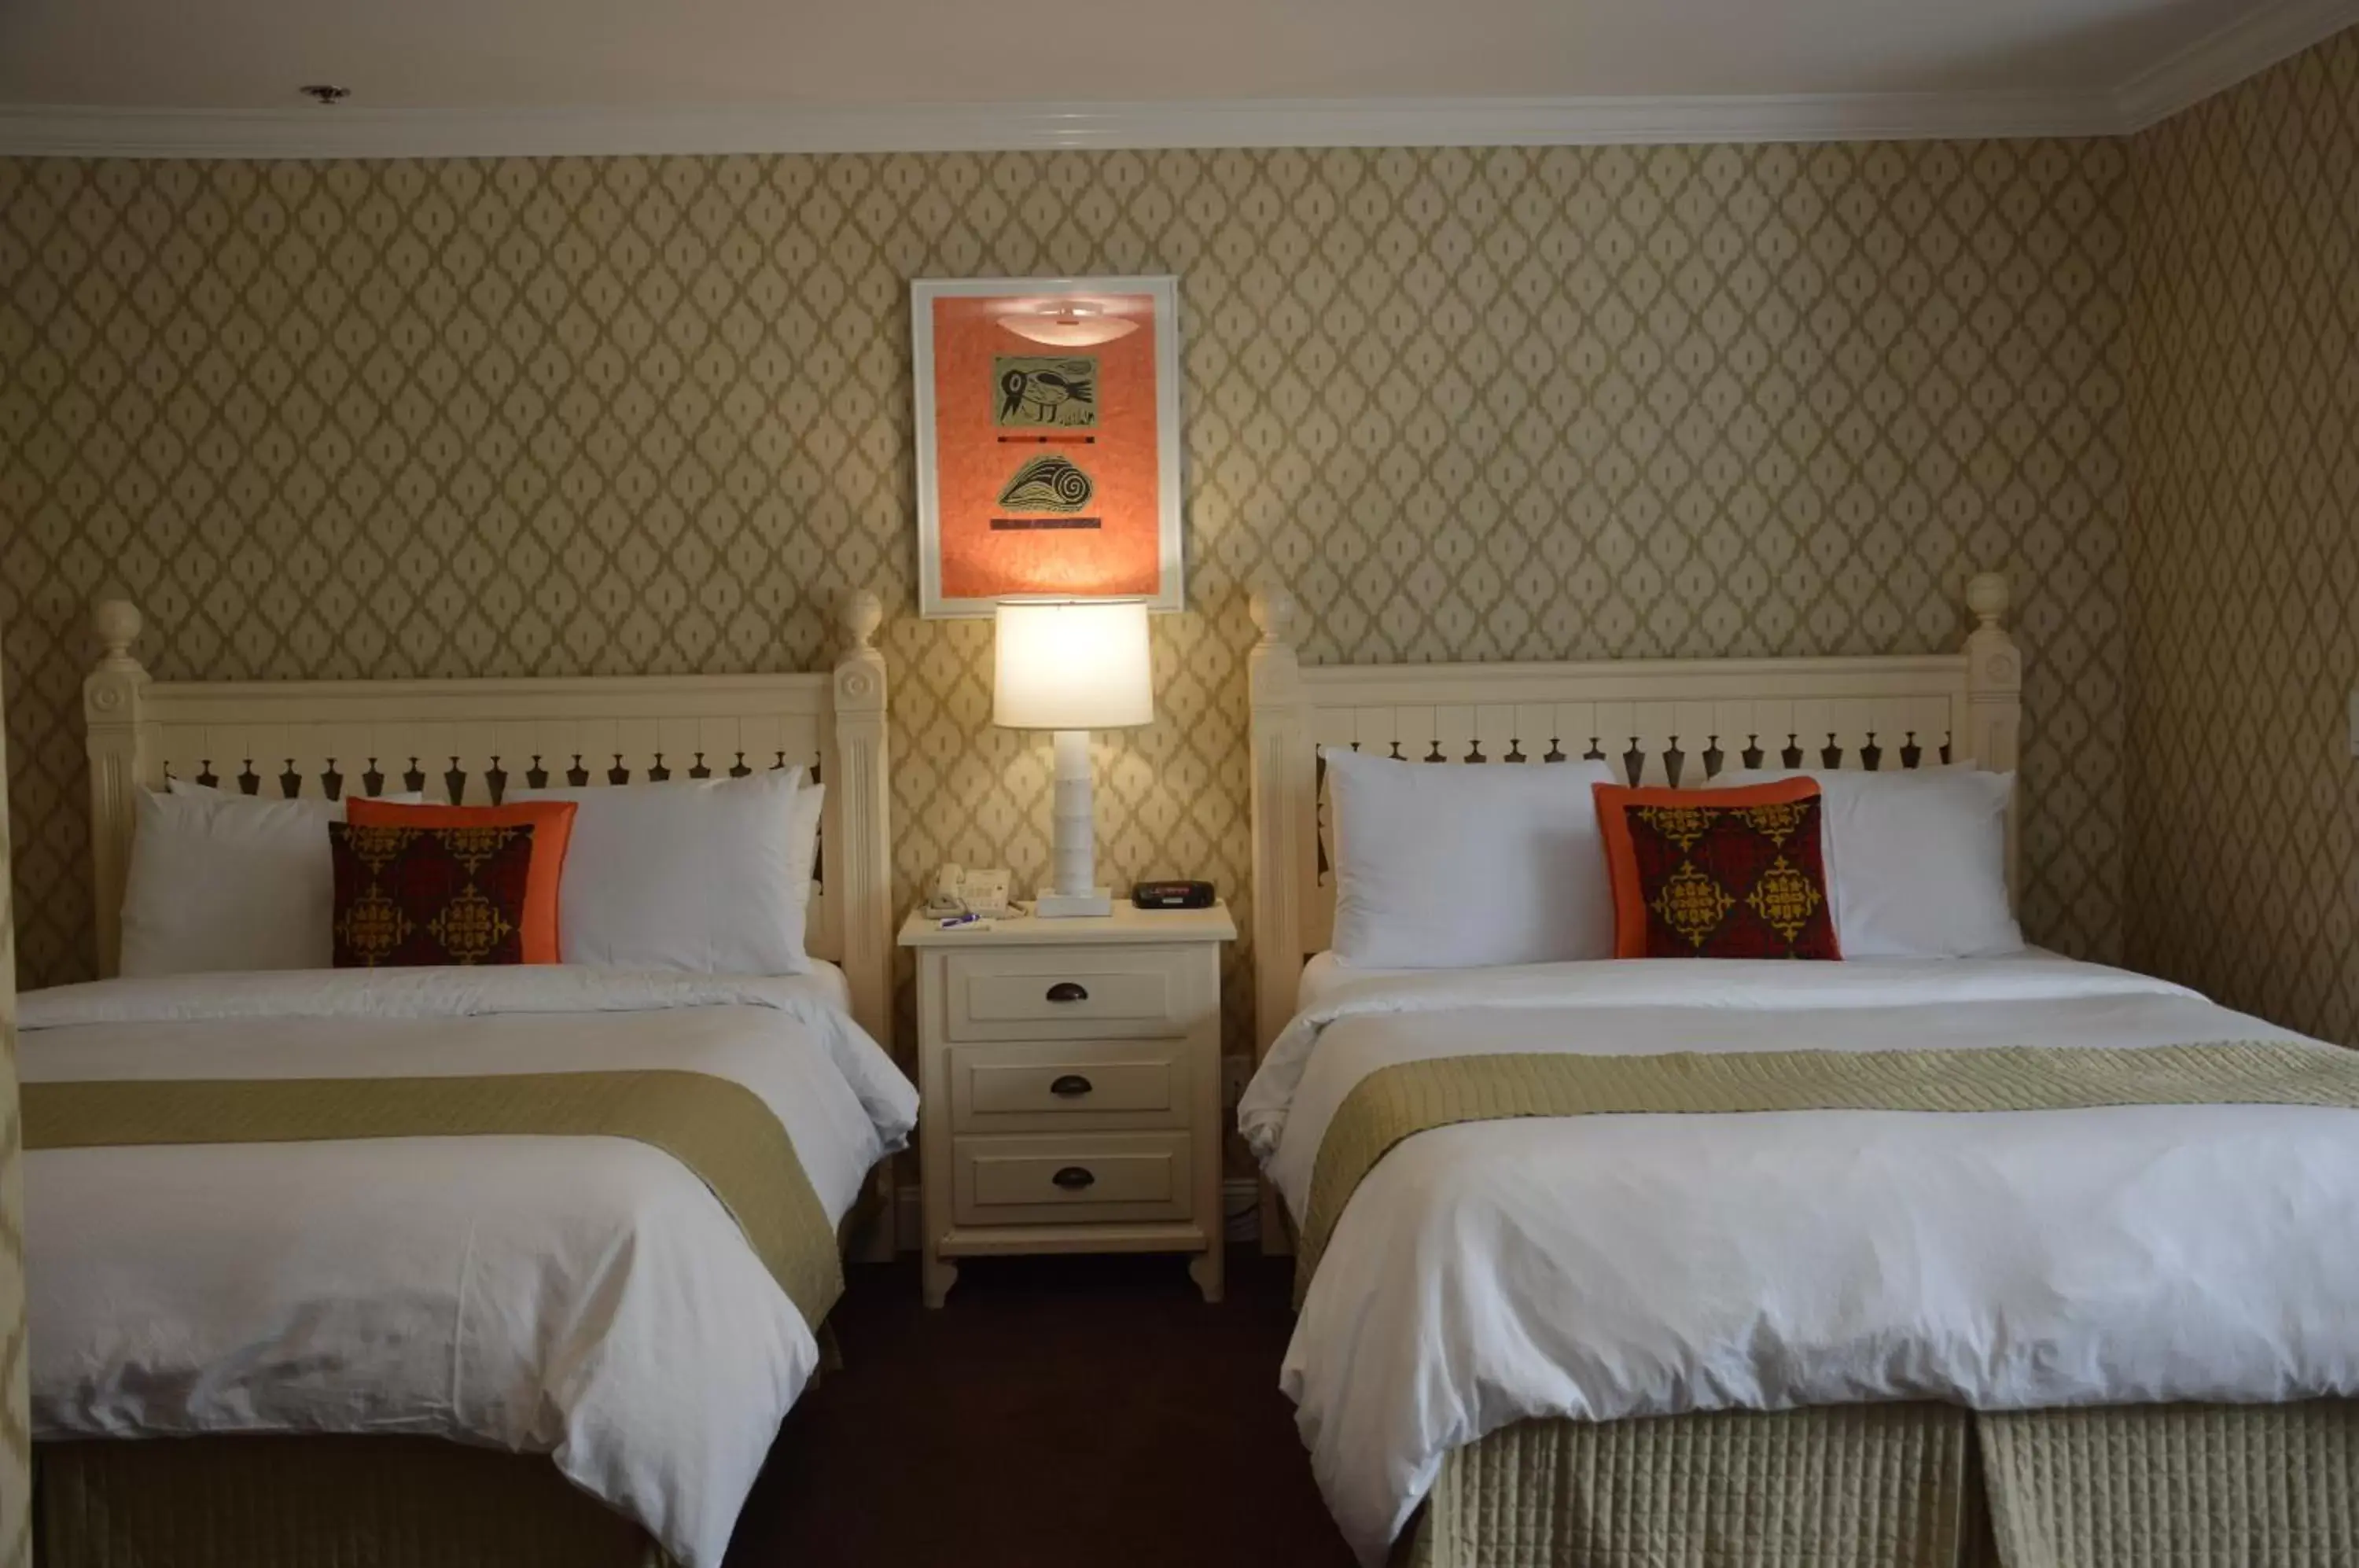 Decorative detail, Bed in Southampton Inn